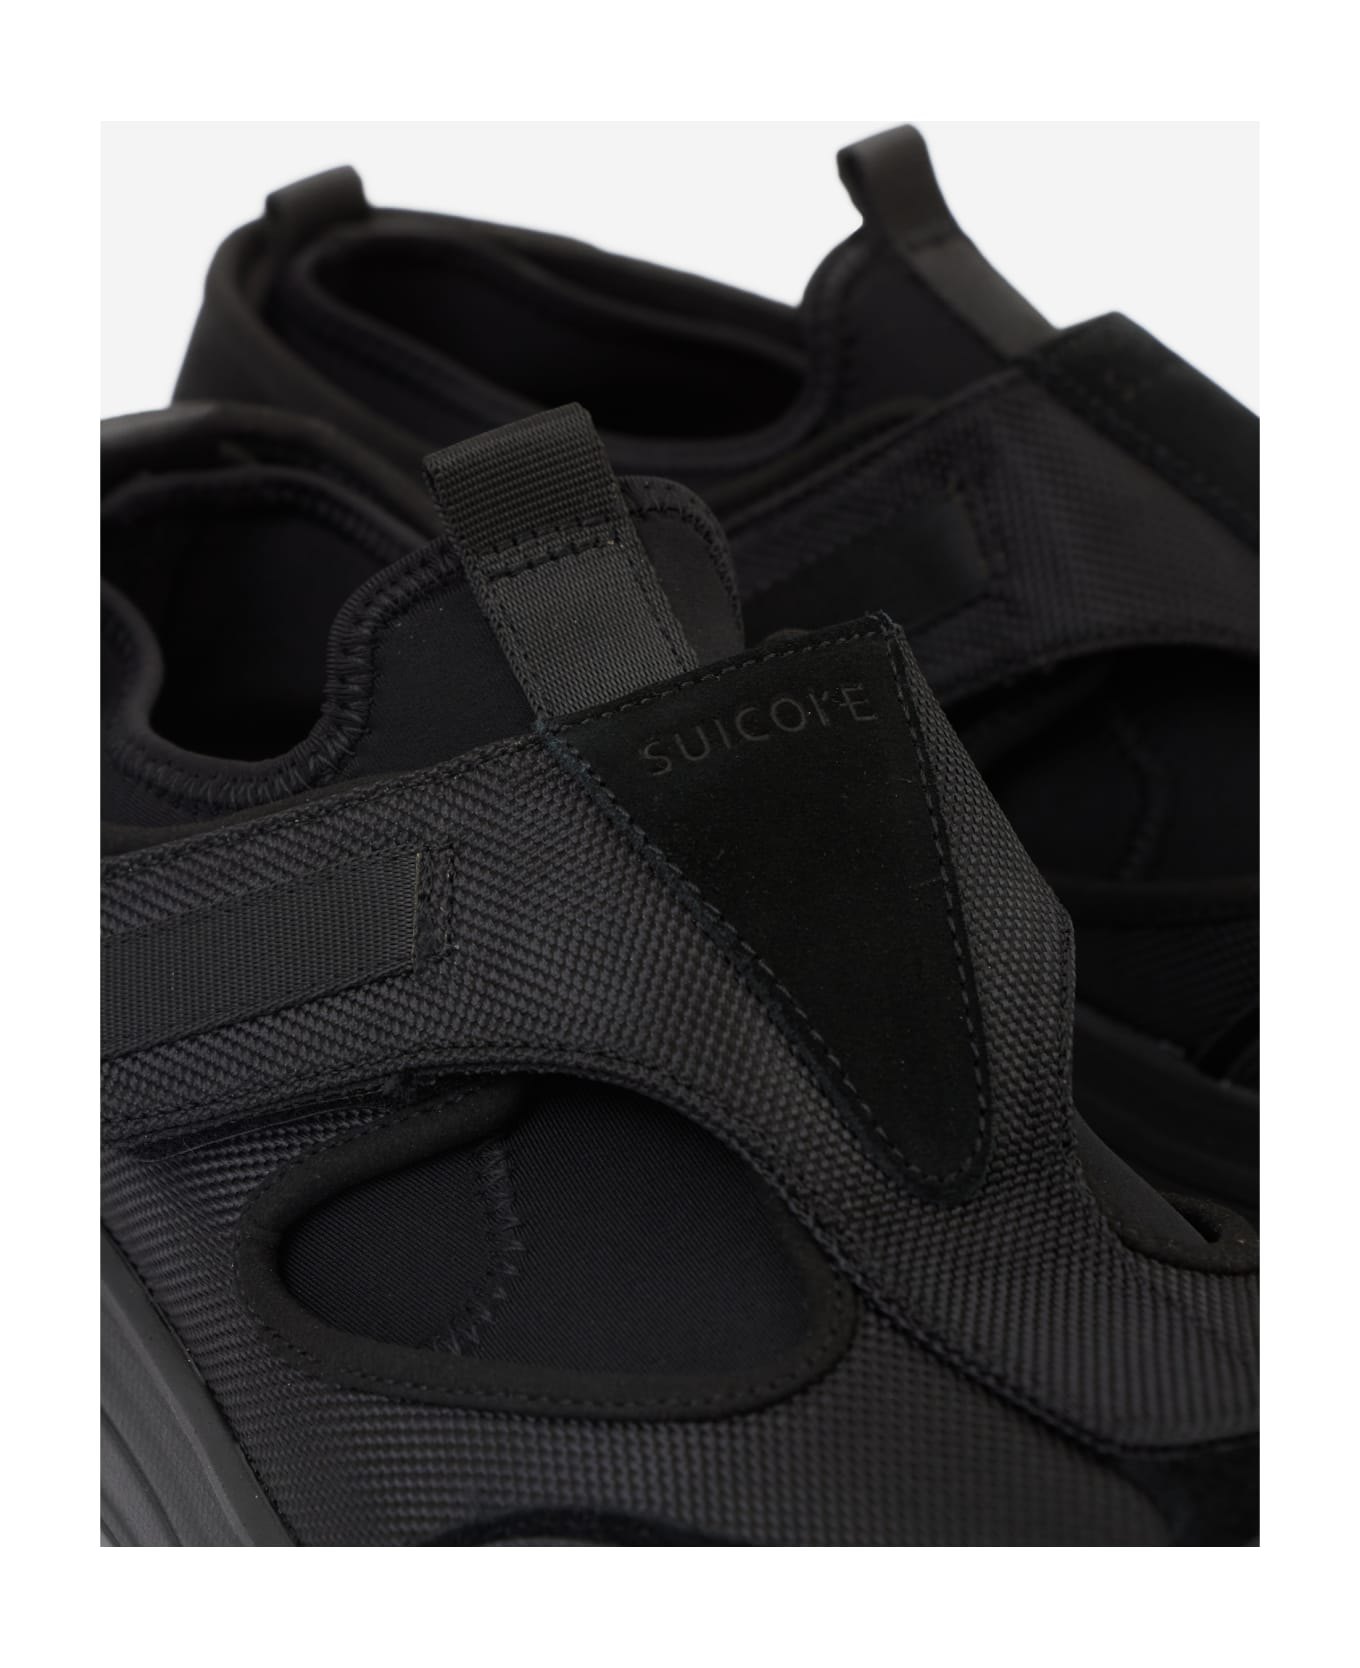 SUICOKE Tred Sneakers - black スニーカー